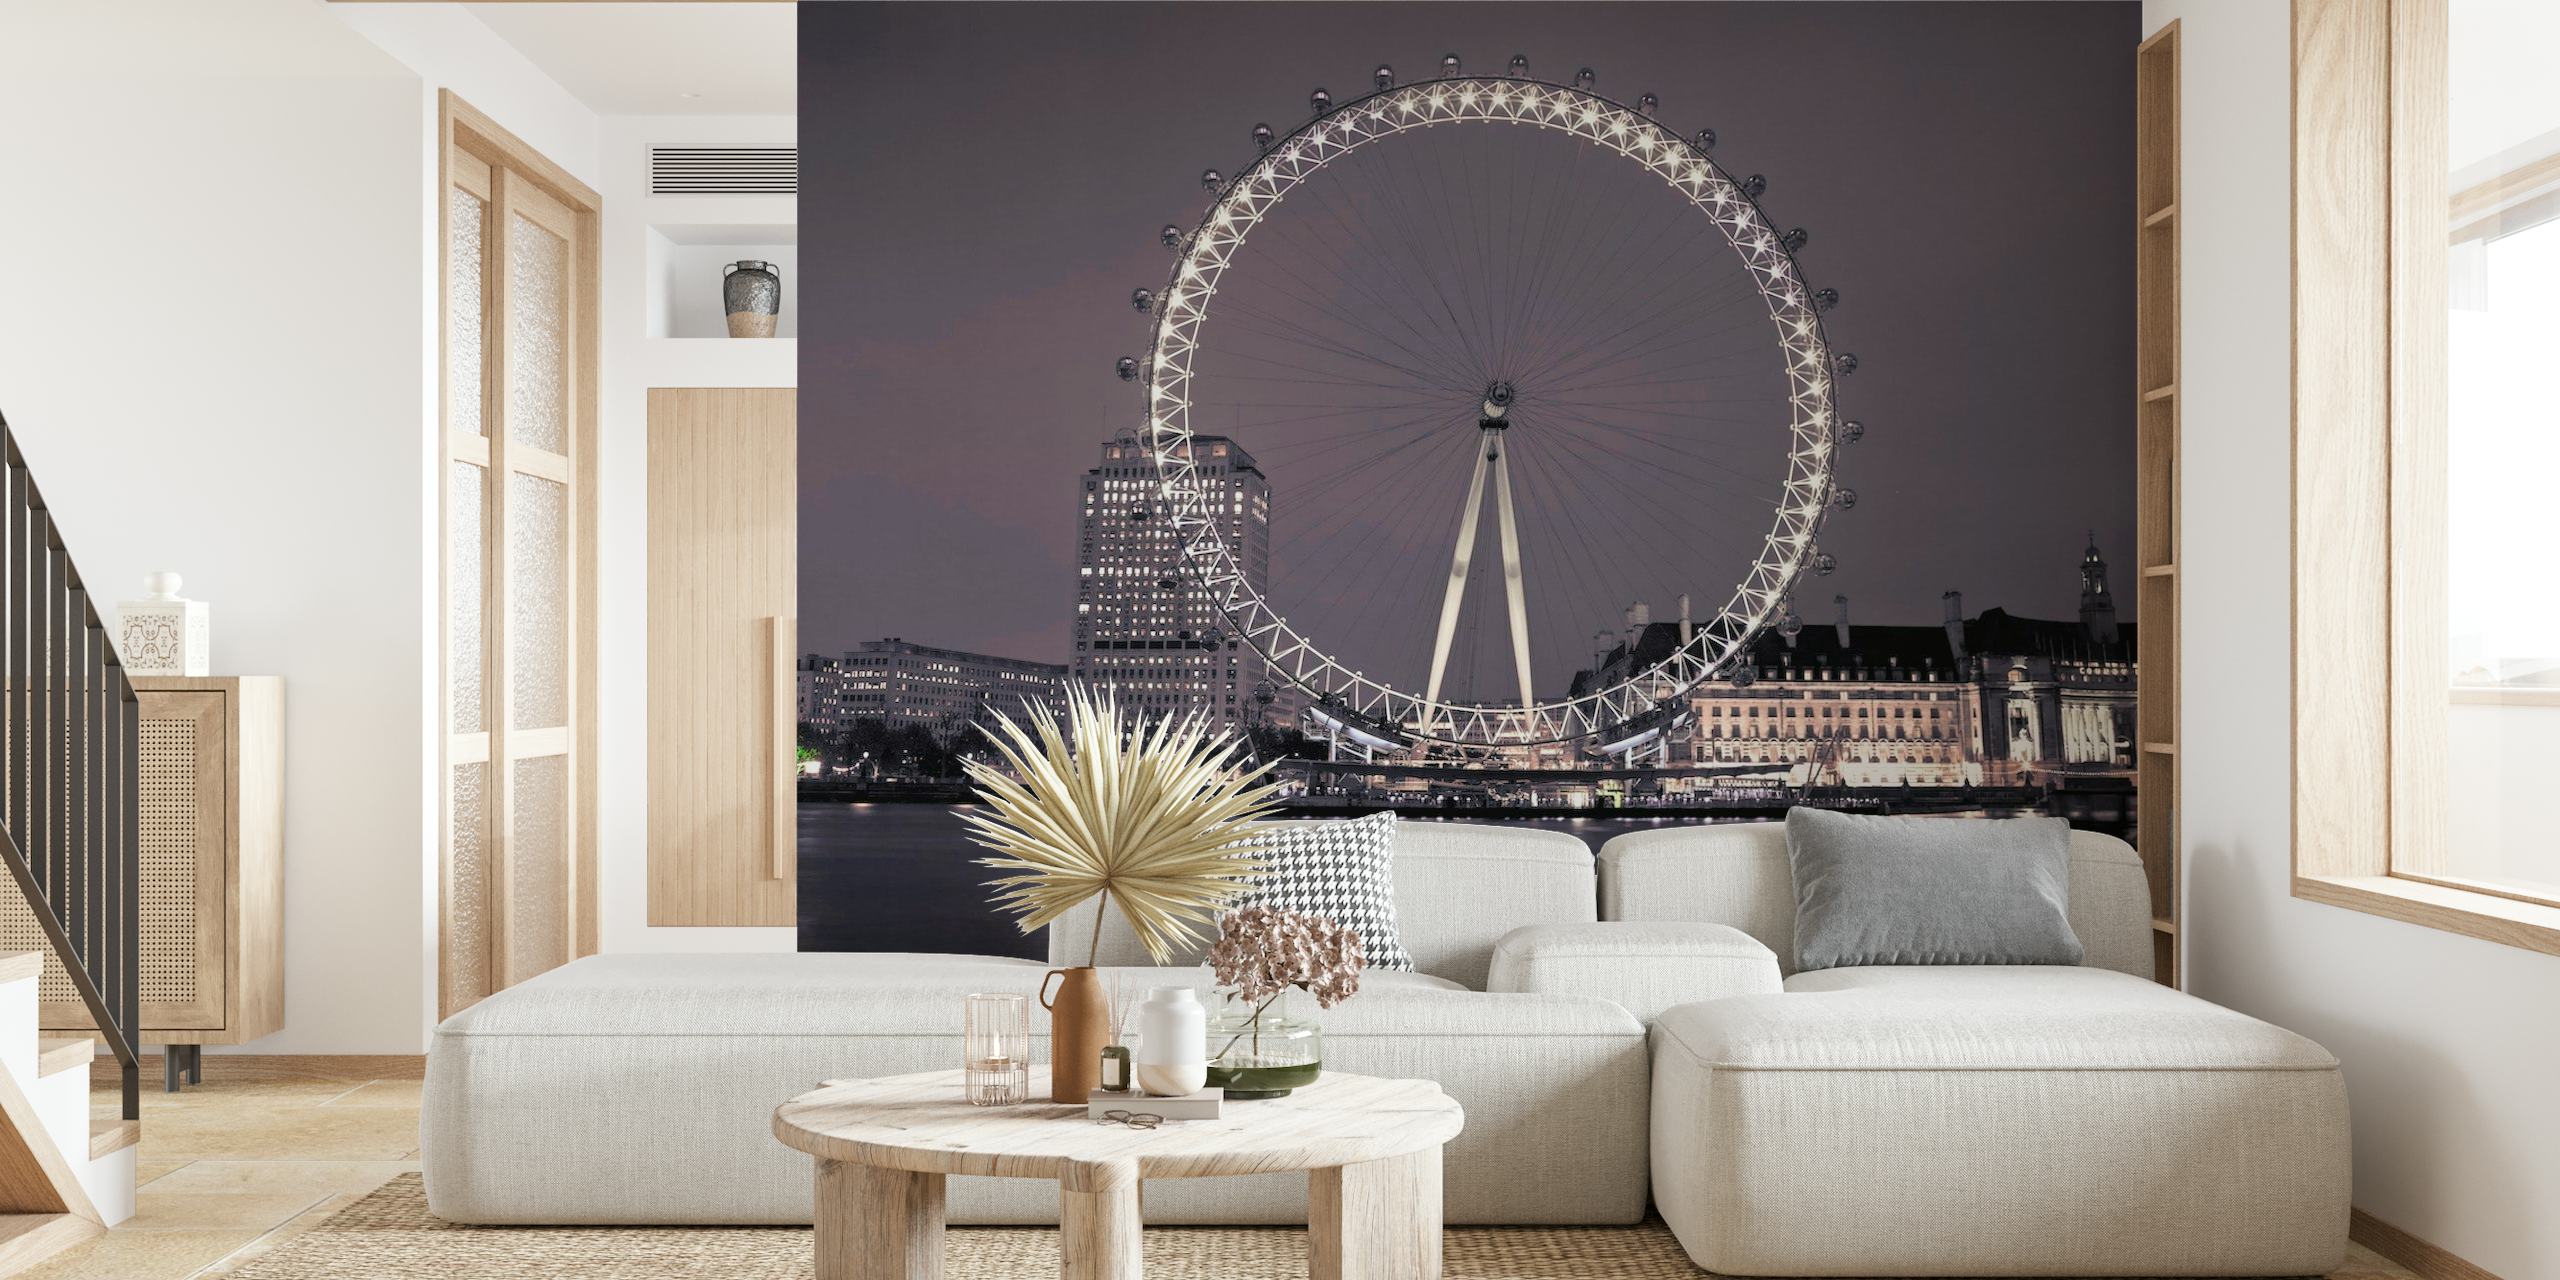 Iconic London Eye papel pintado